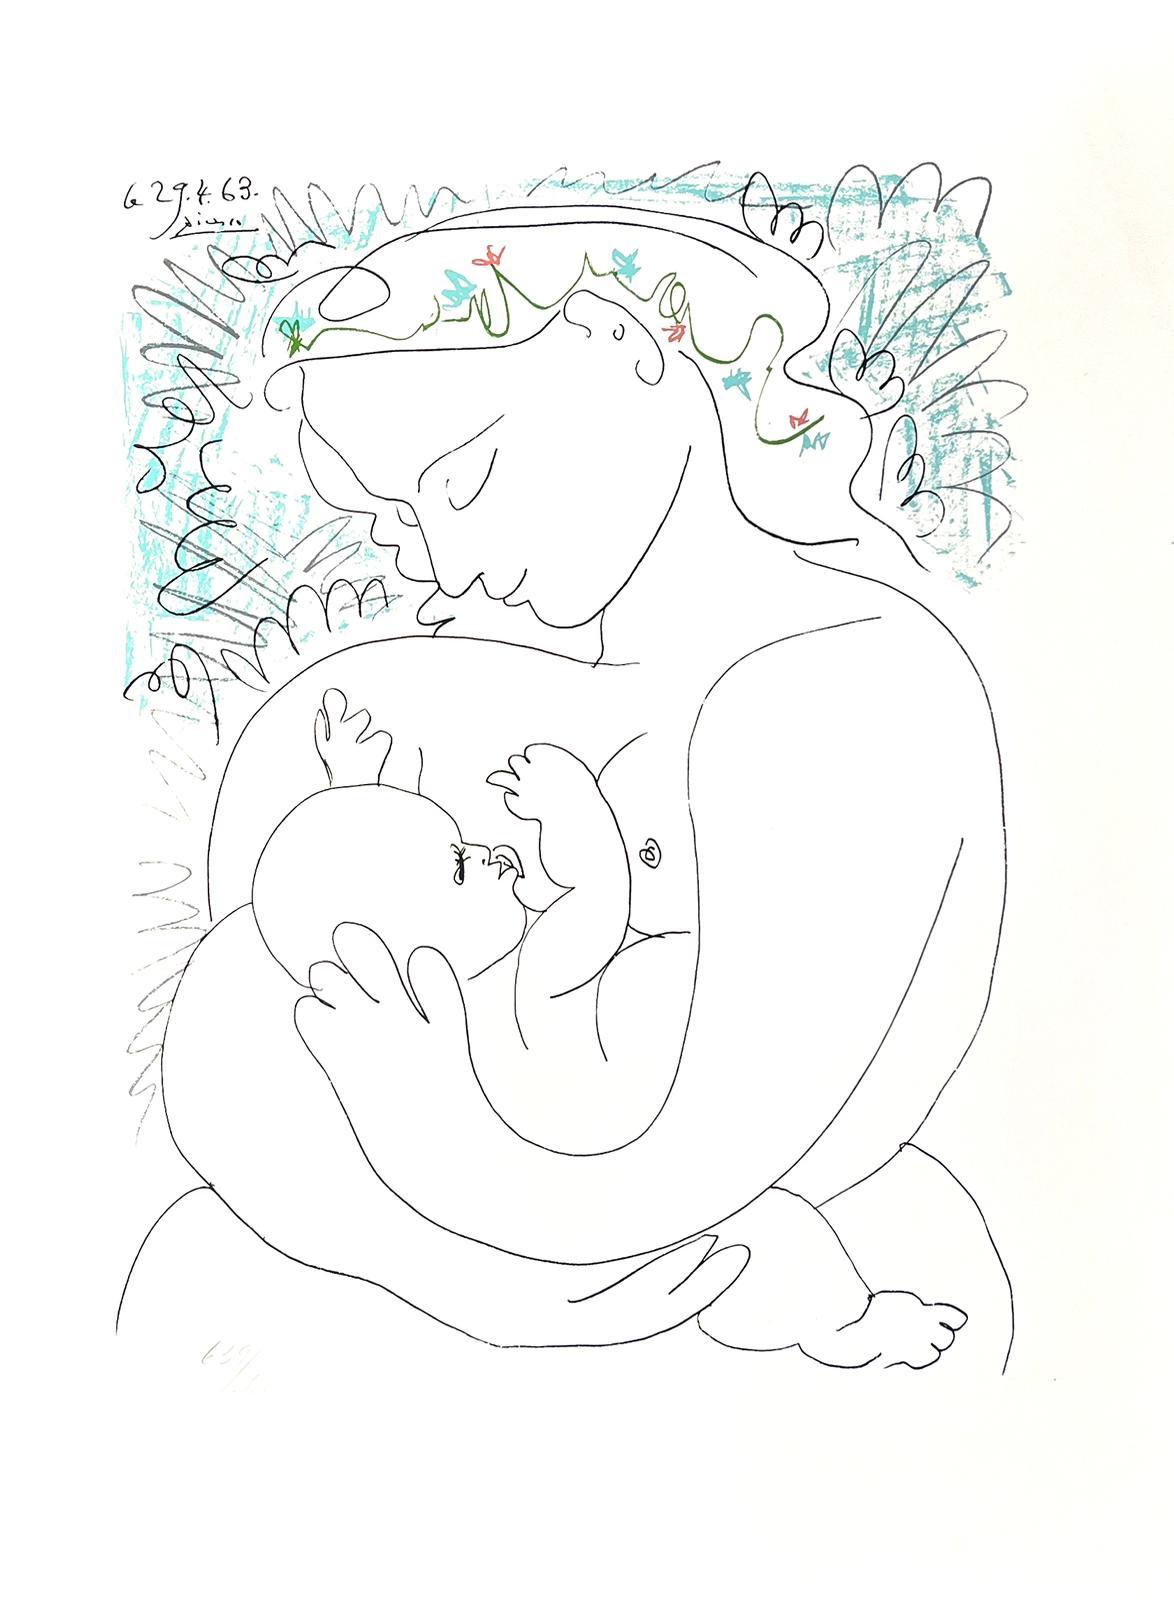 (after) Pablo Picasso Portrait Print - Maternity after Pablo Picasso Color Lithograph by SPADEM 1983 